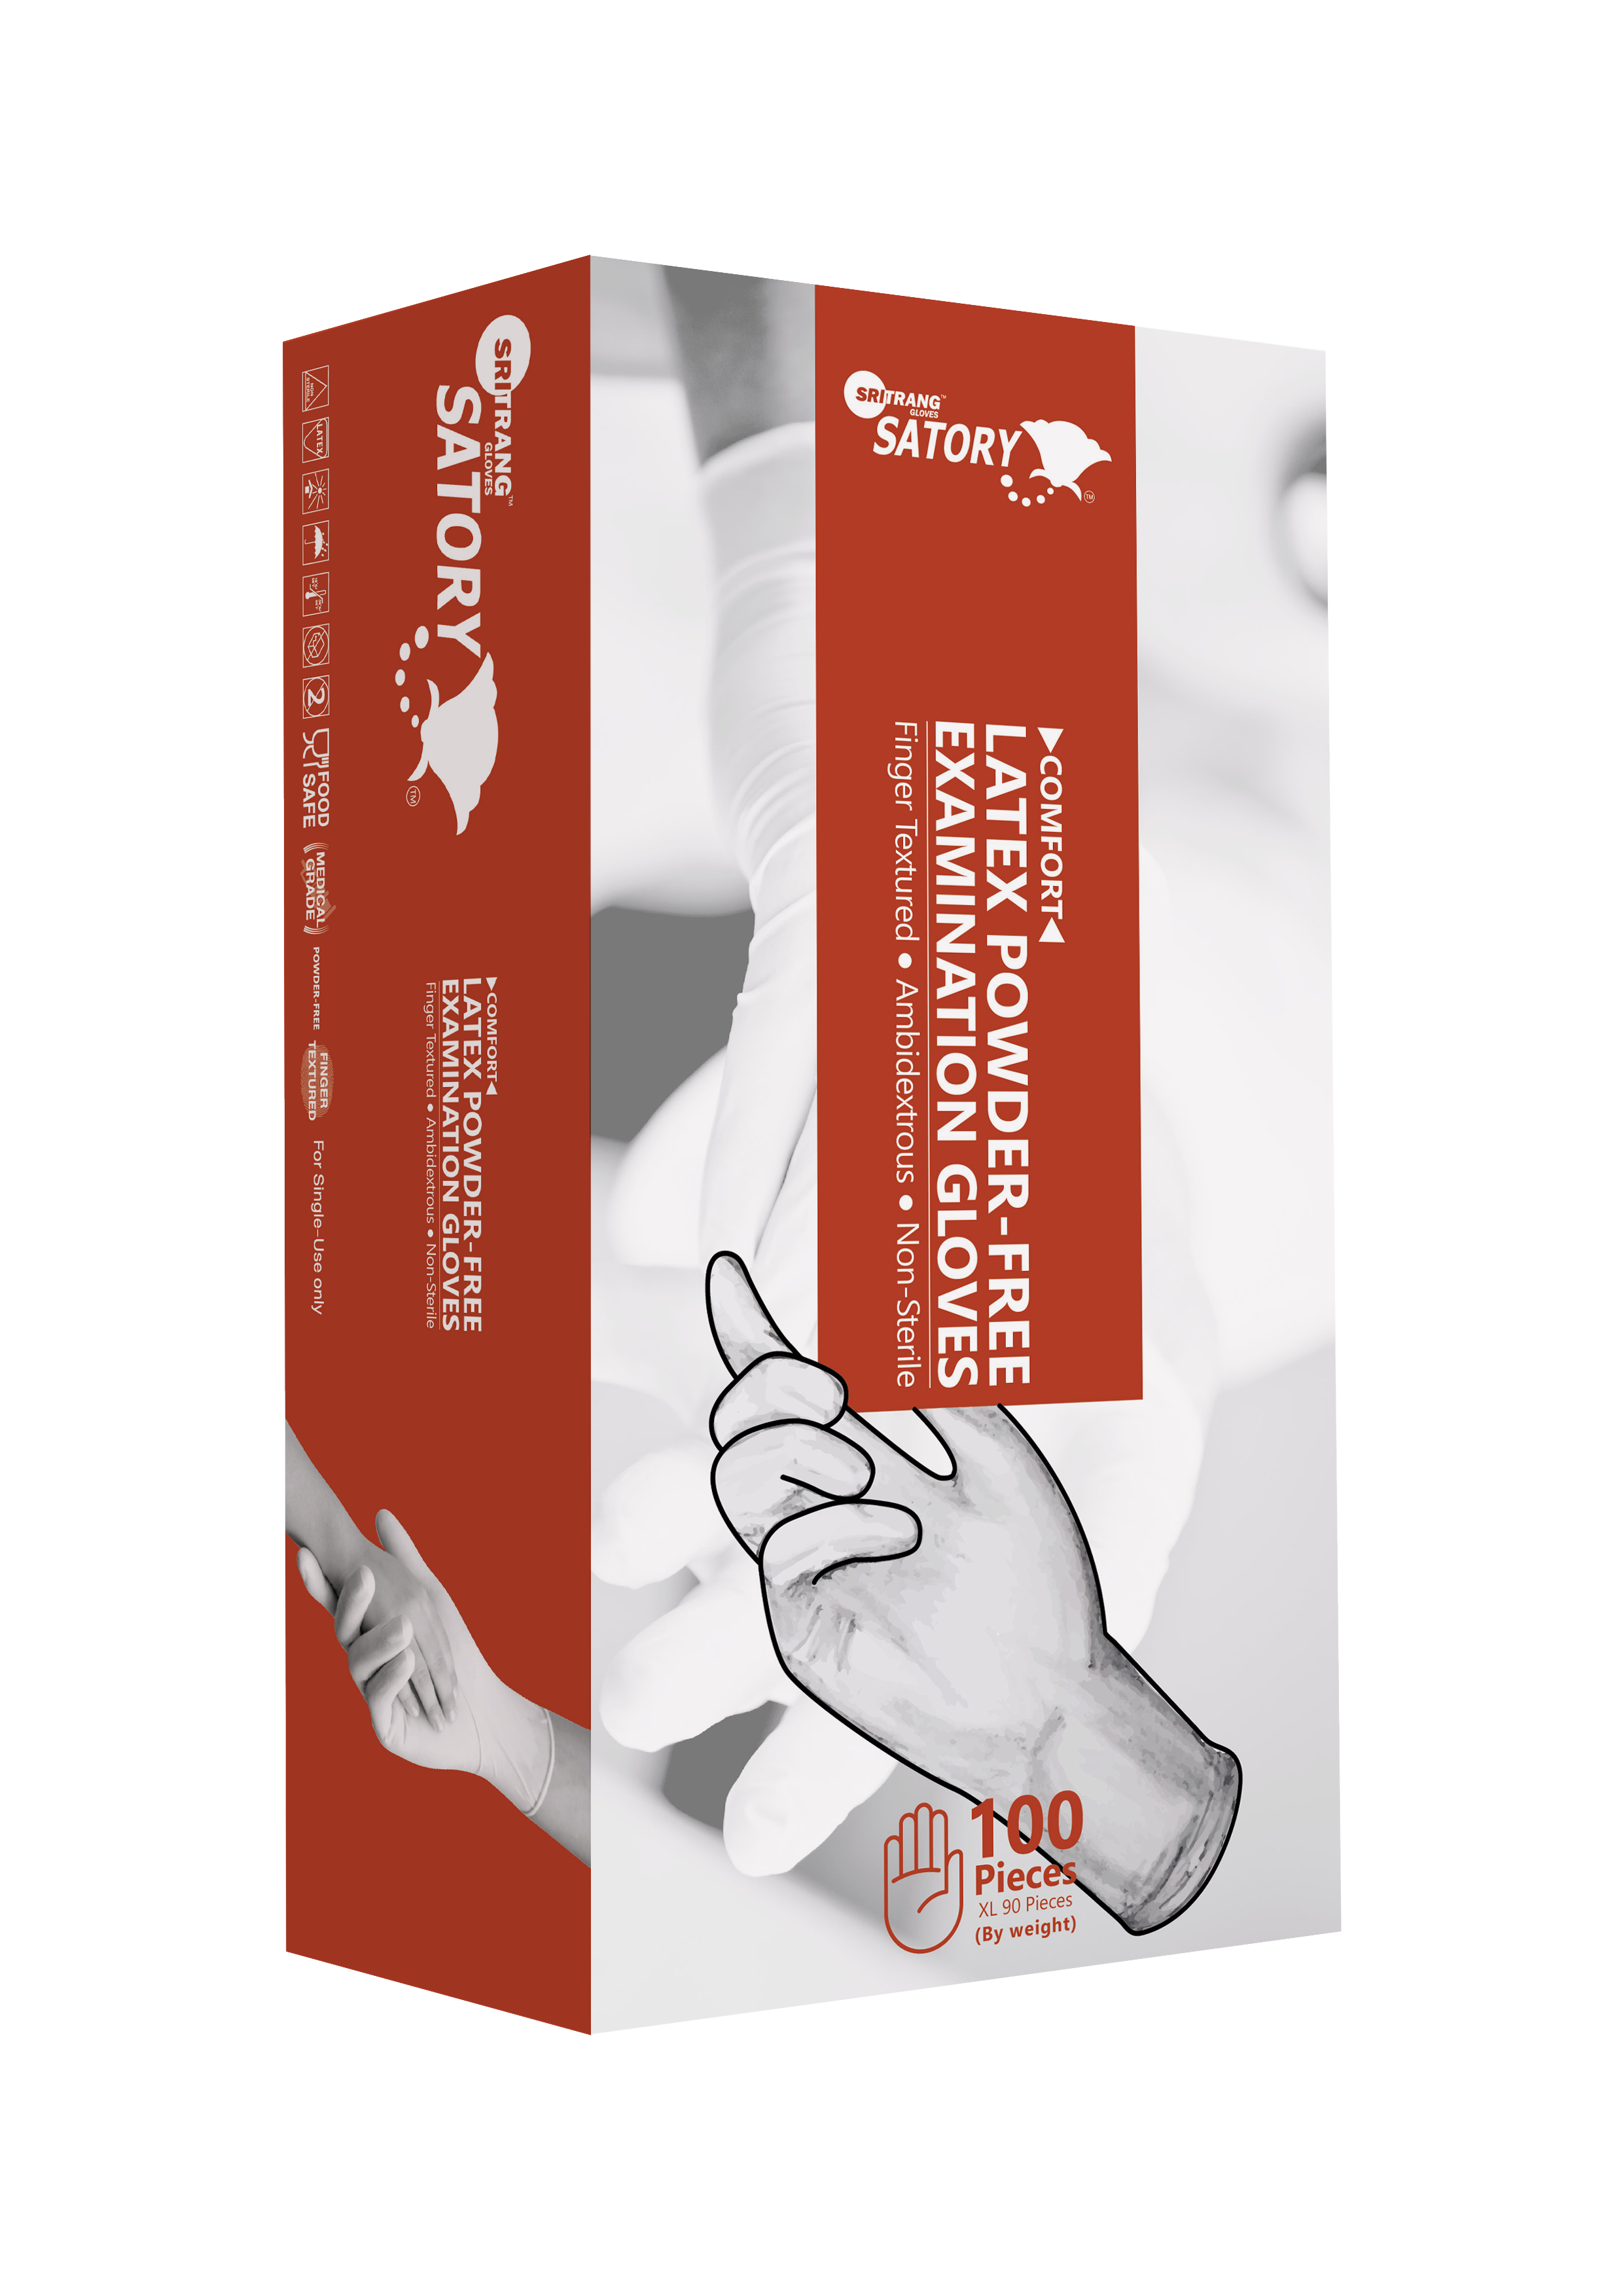 Satory Comfort Latex Powder-free Examination Gloves